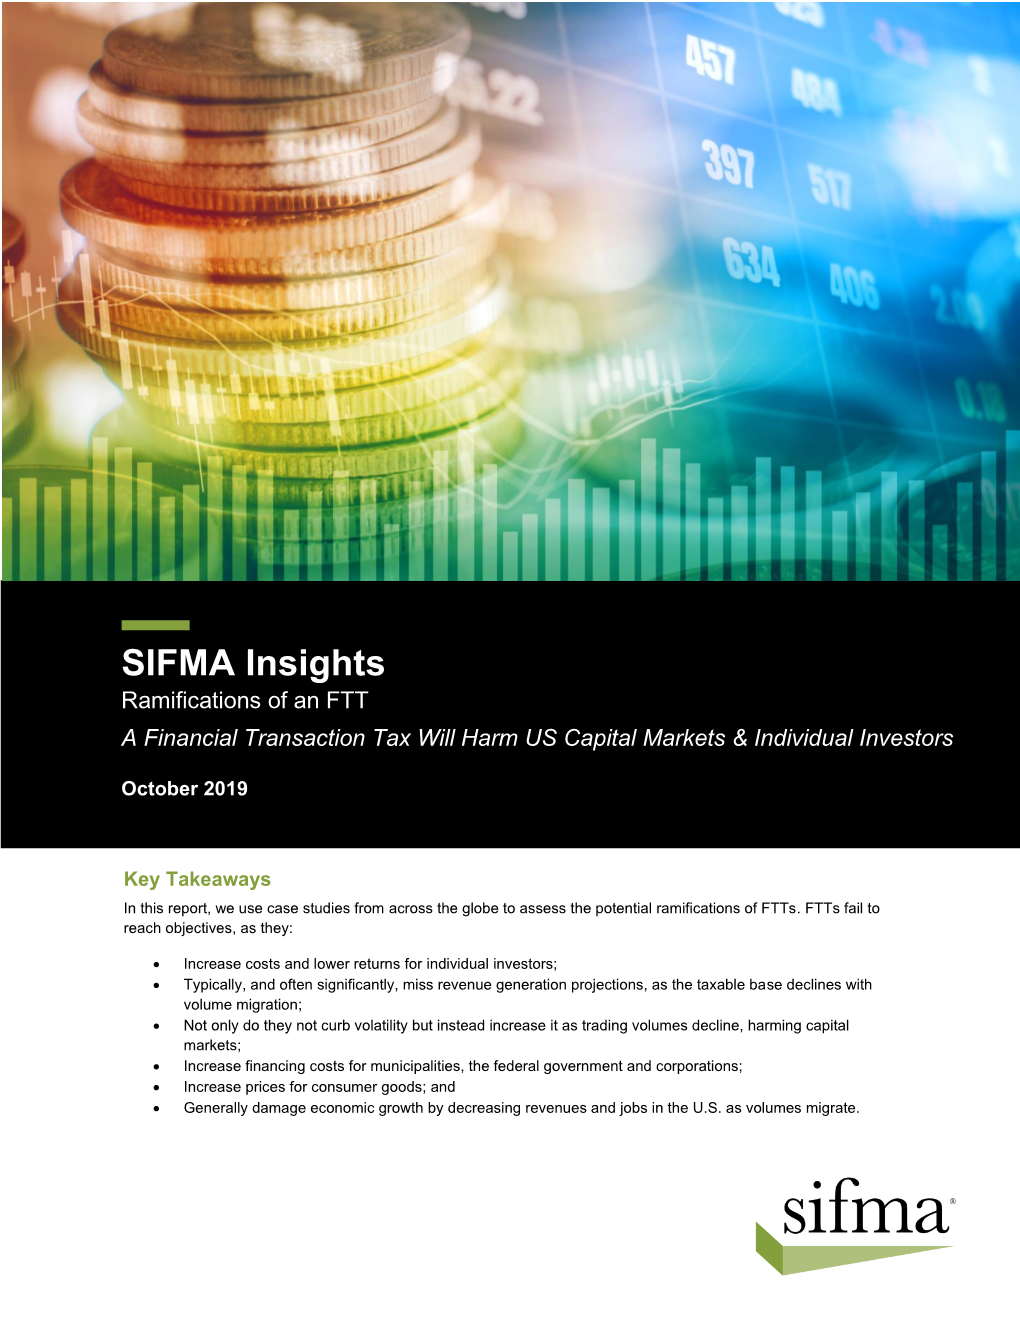 SIFMA Insights Ramifications of an FTT a Financial Transaction Tax Will Harm US Capital Markets & Individual Investors